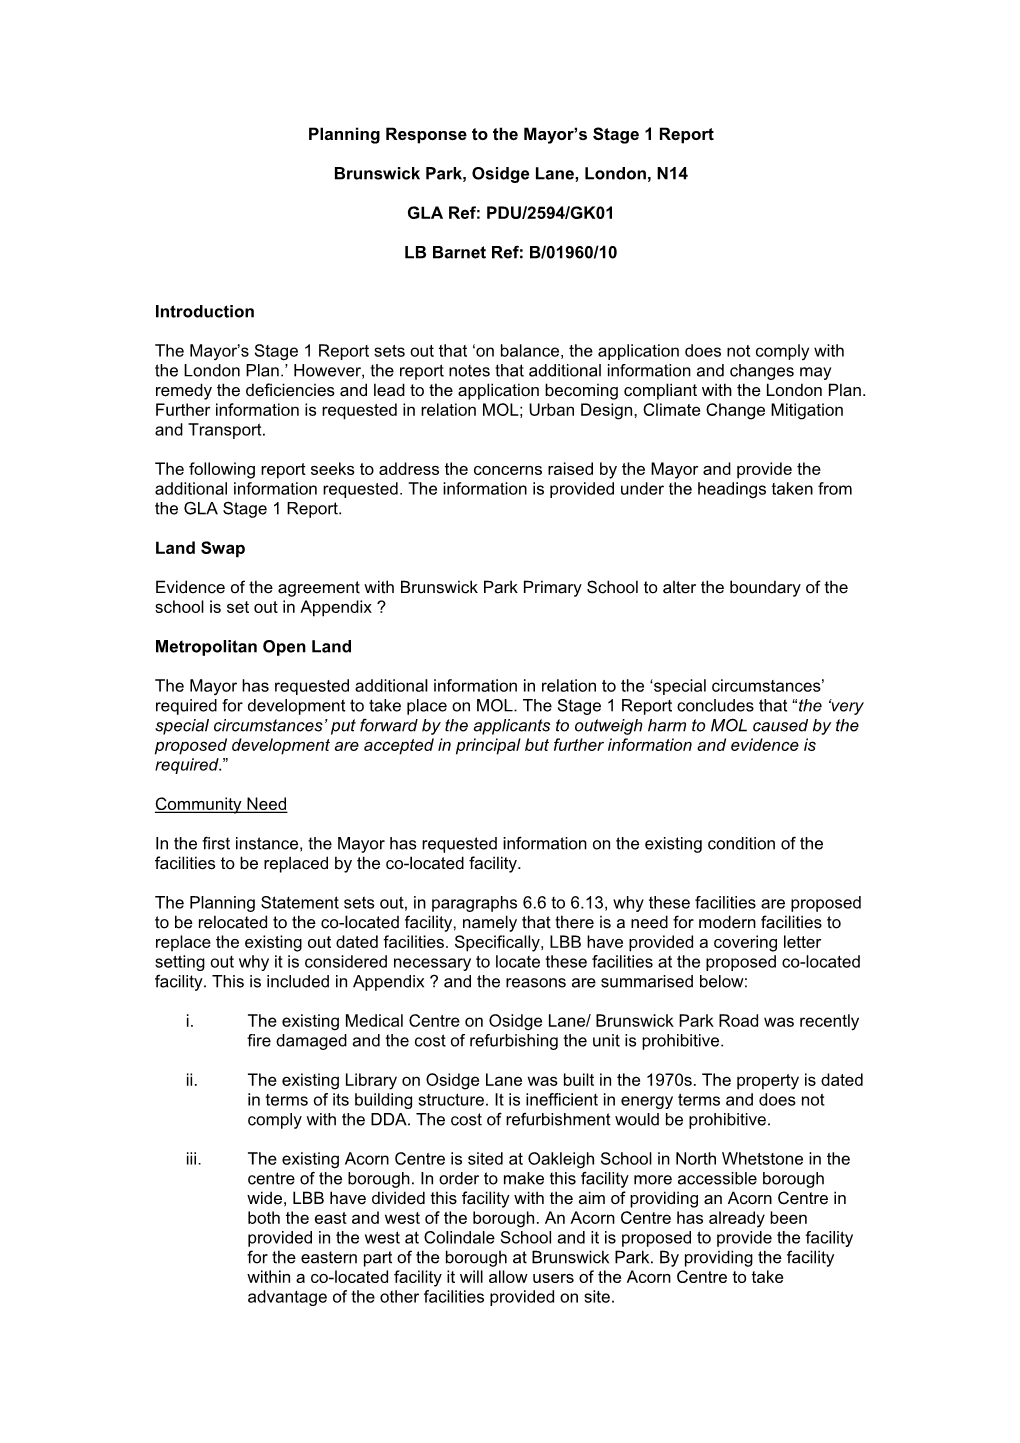 Planning Response to the Mayor's Stage 1 Report Brunswick Park, Osidge Lane, London, N14 GLA Ref: PDU/2594/GK01 LB Barnet Ref